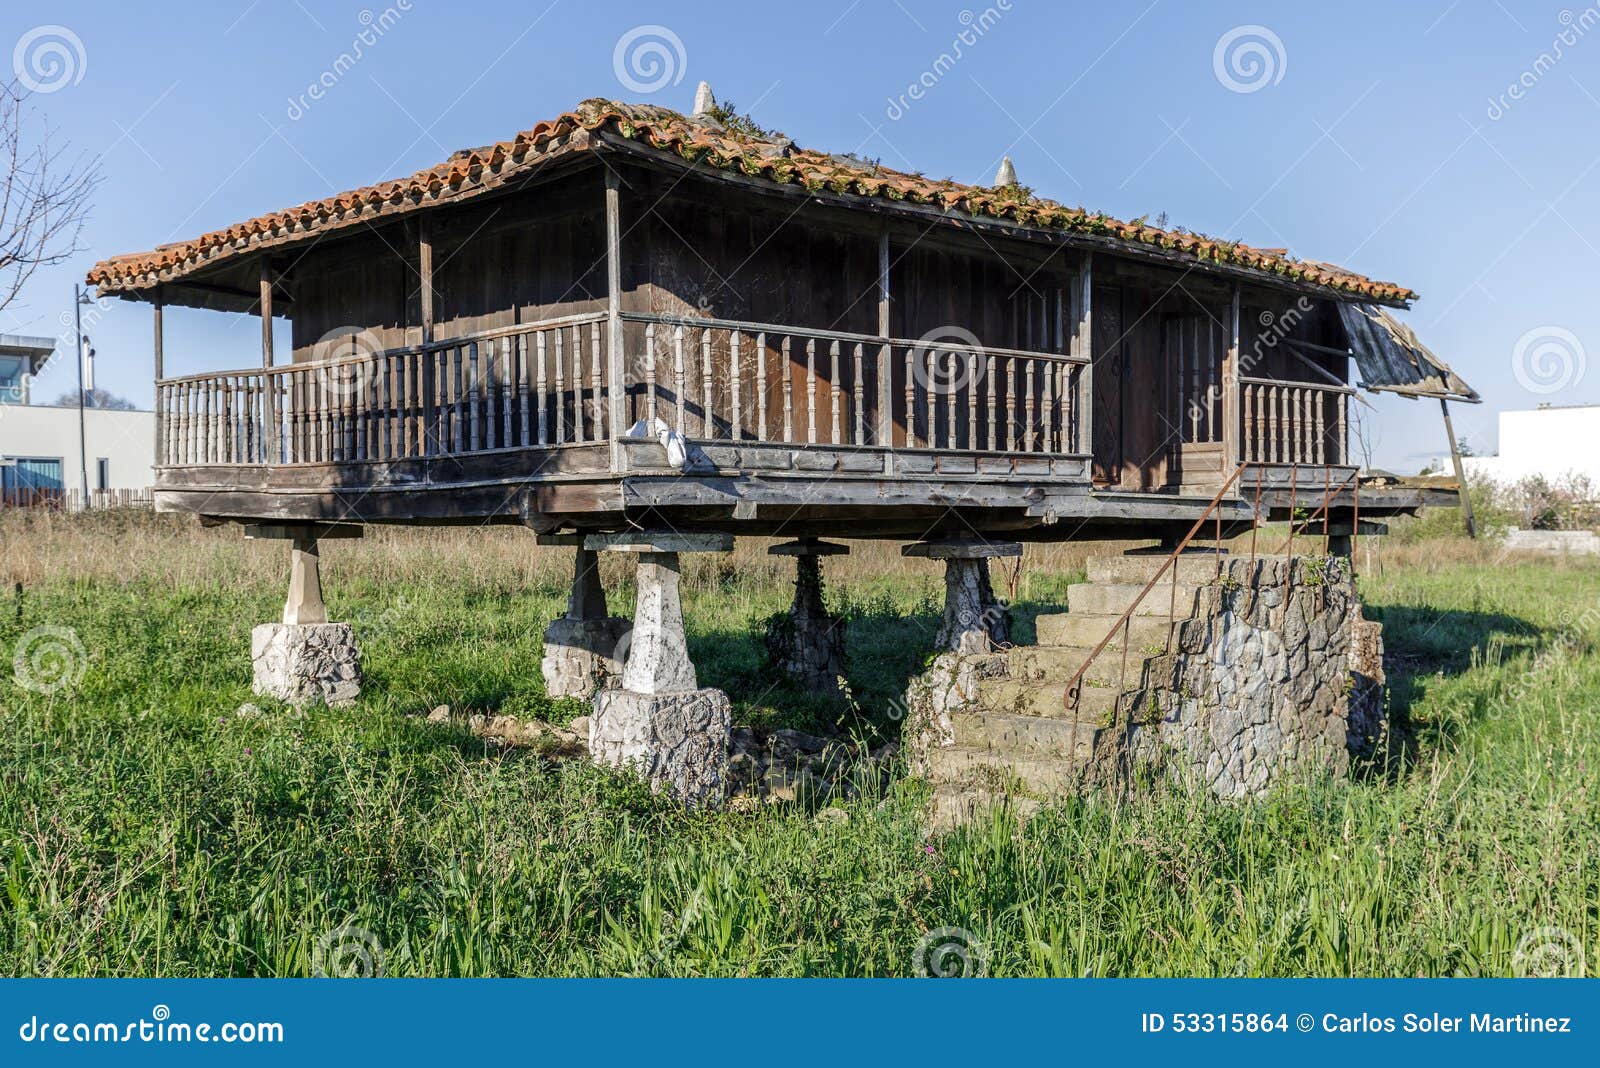 horreo , granary, typical galician house